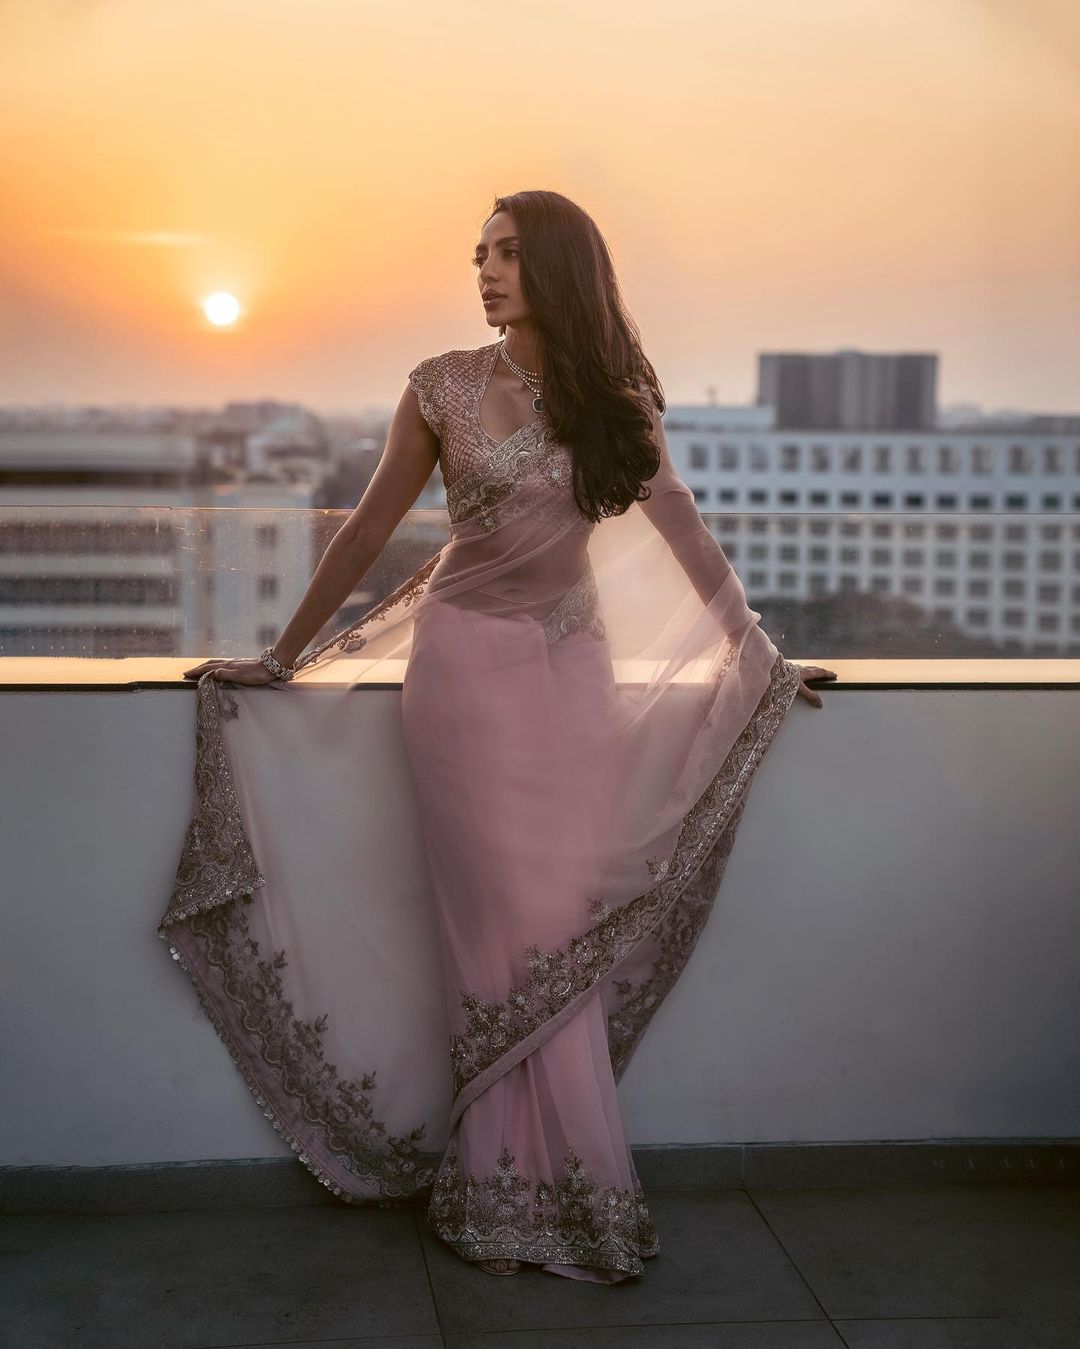 sobhita-dhulipala-stunning-looks-in-gorgeous-pink-saree-designed-by-manish-malhotra